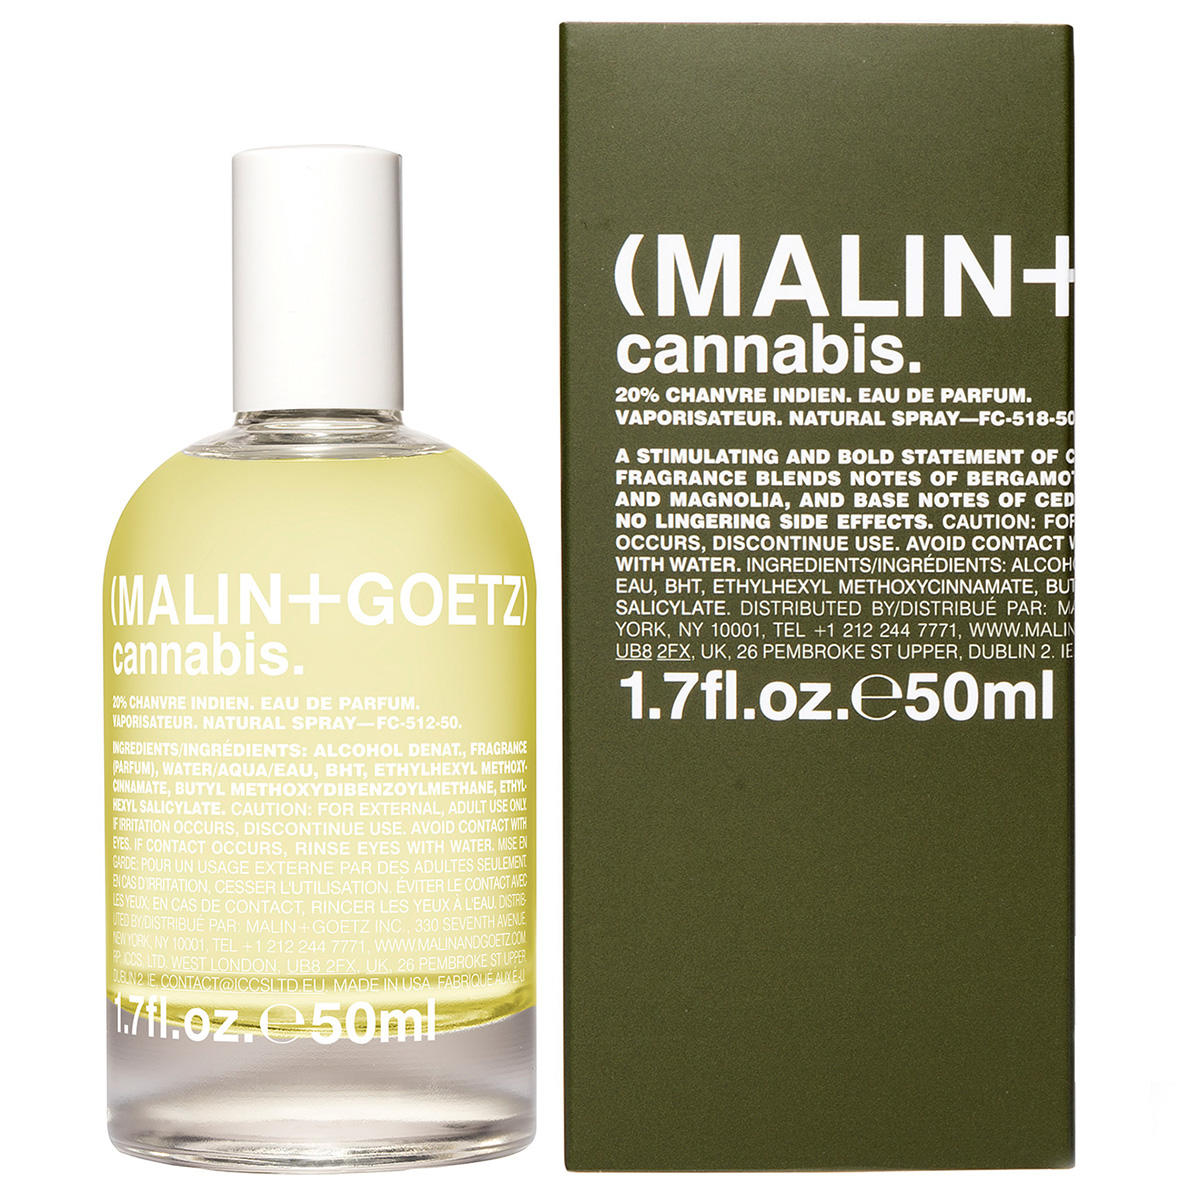 (MALIN+GOETZ) Cannabis Eau de Parfum 50 ml - 2